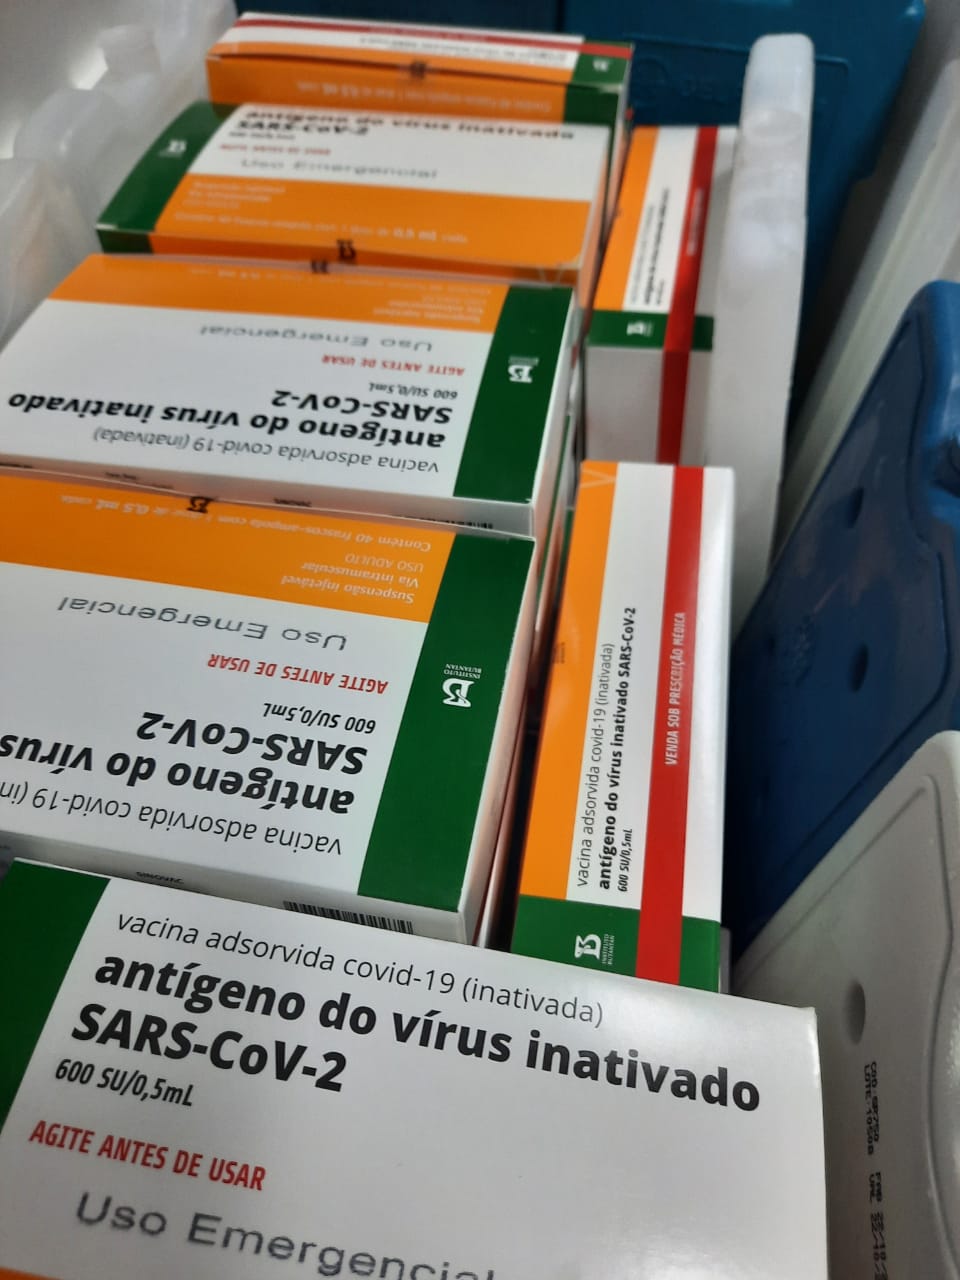 Brusque recebe mais 1.400 doses da vacina CoronaVac